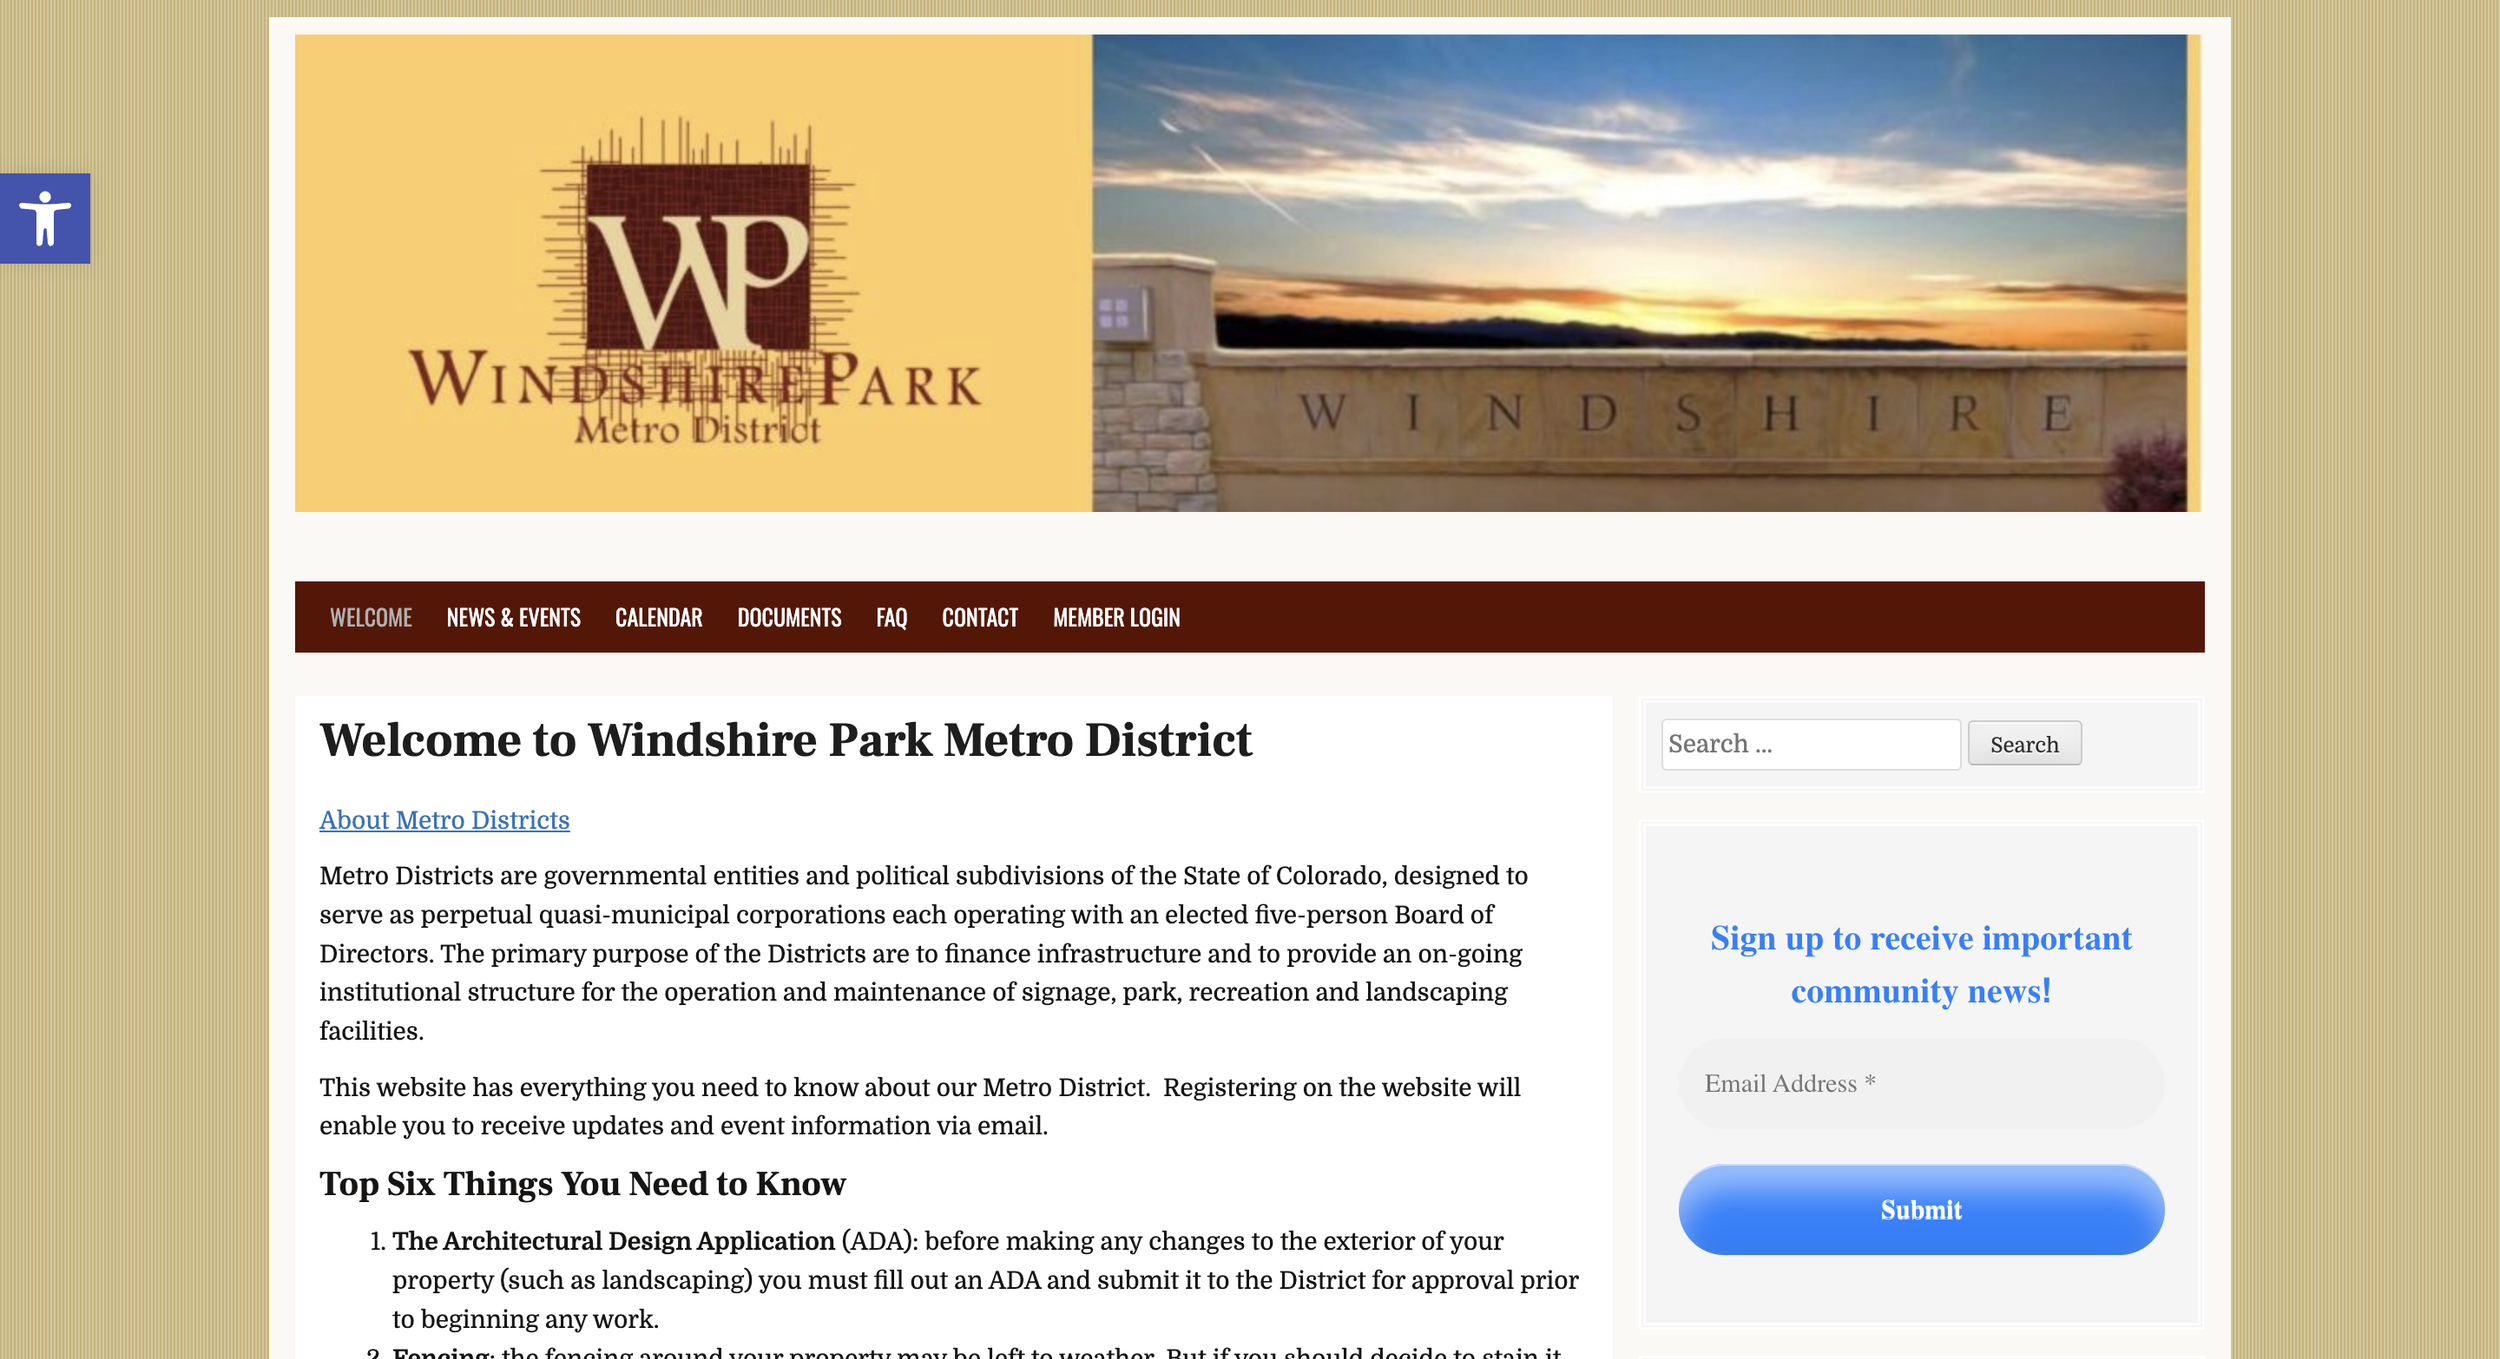 Windshire Park Metro District